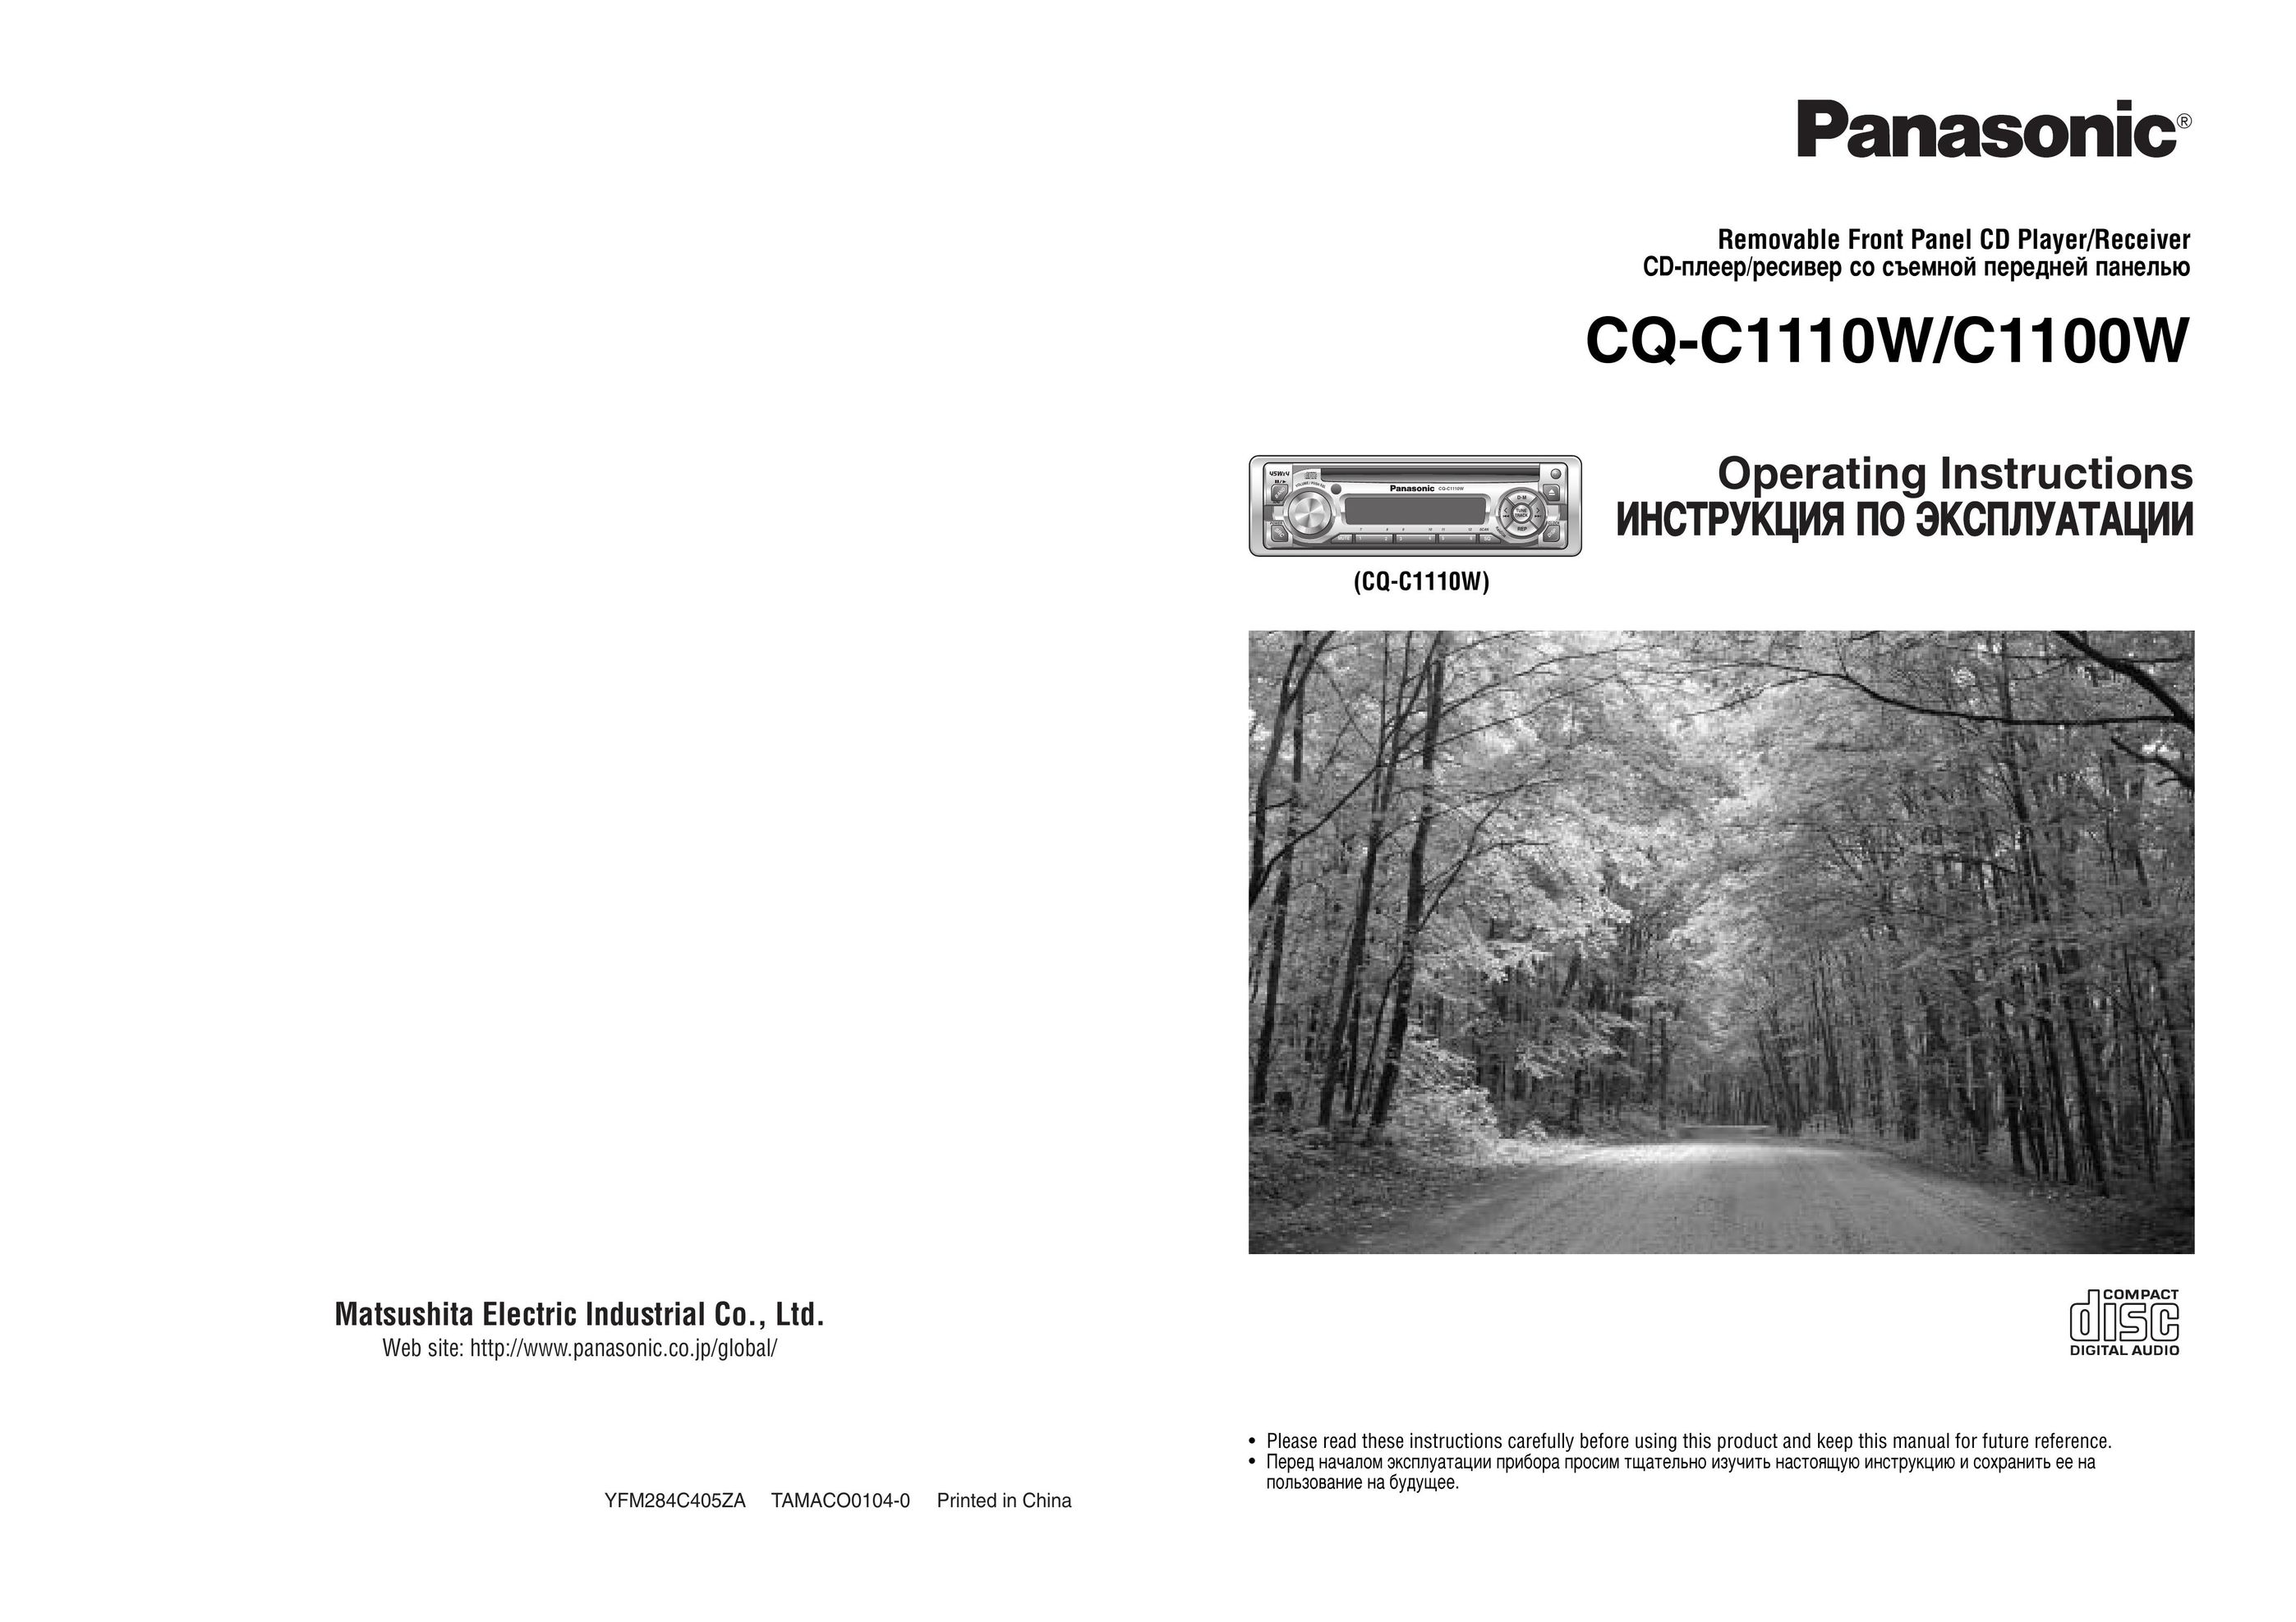 Panasonic CQ-C1100W Car Stereo System User Manual